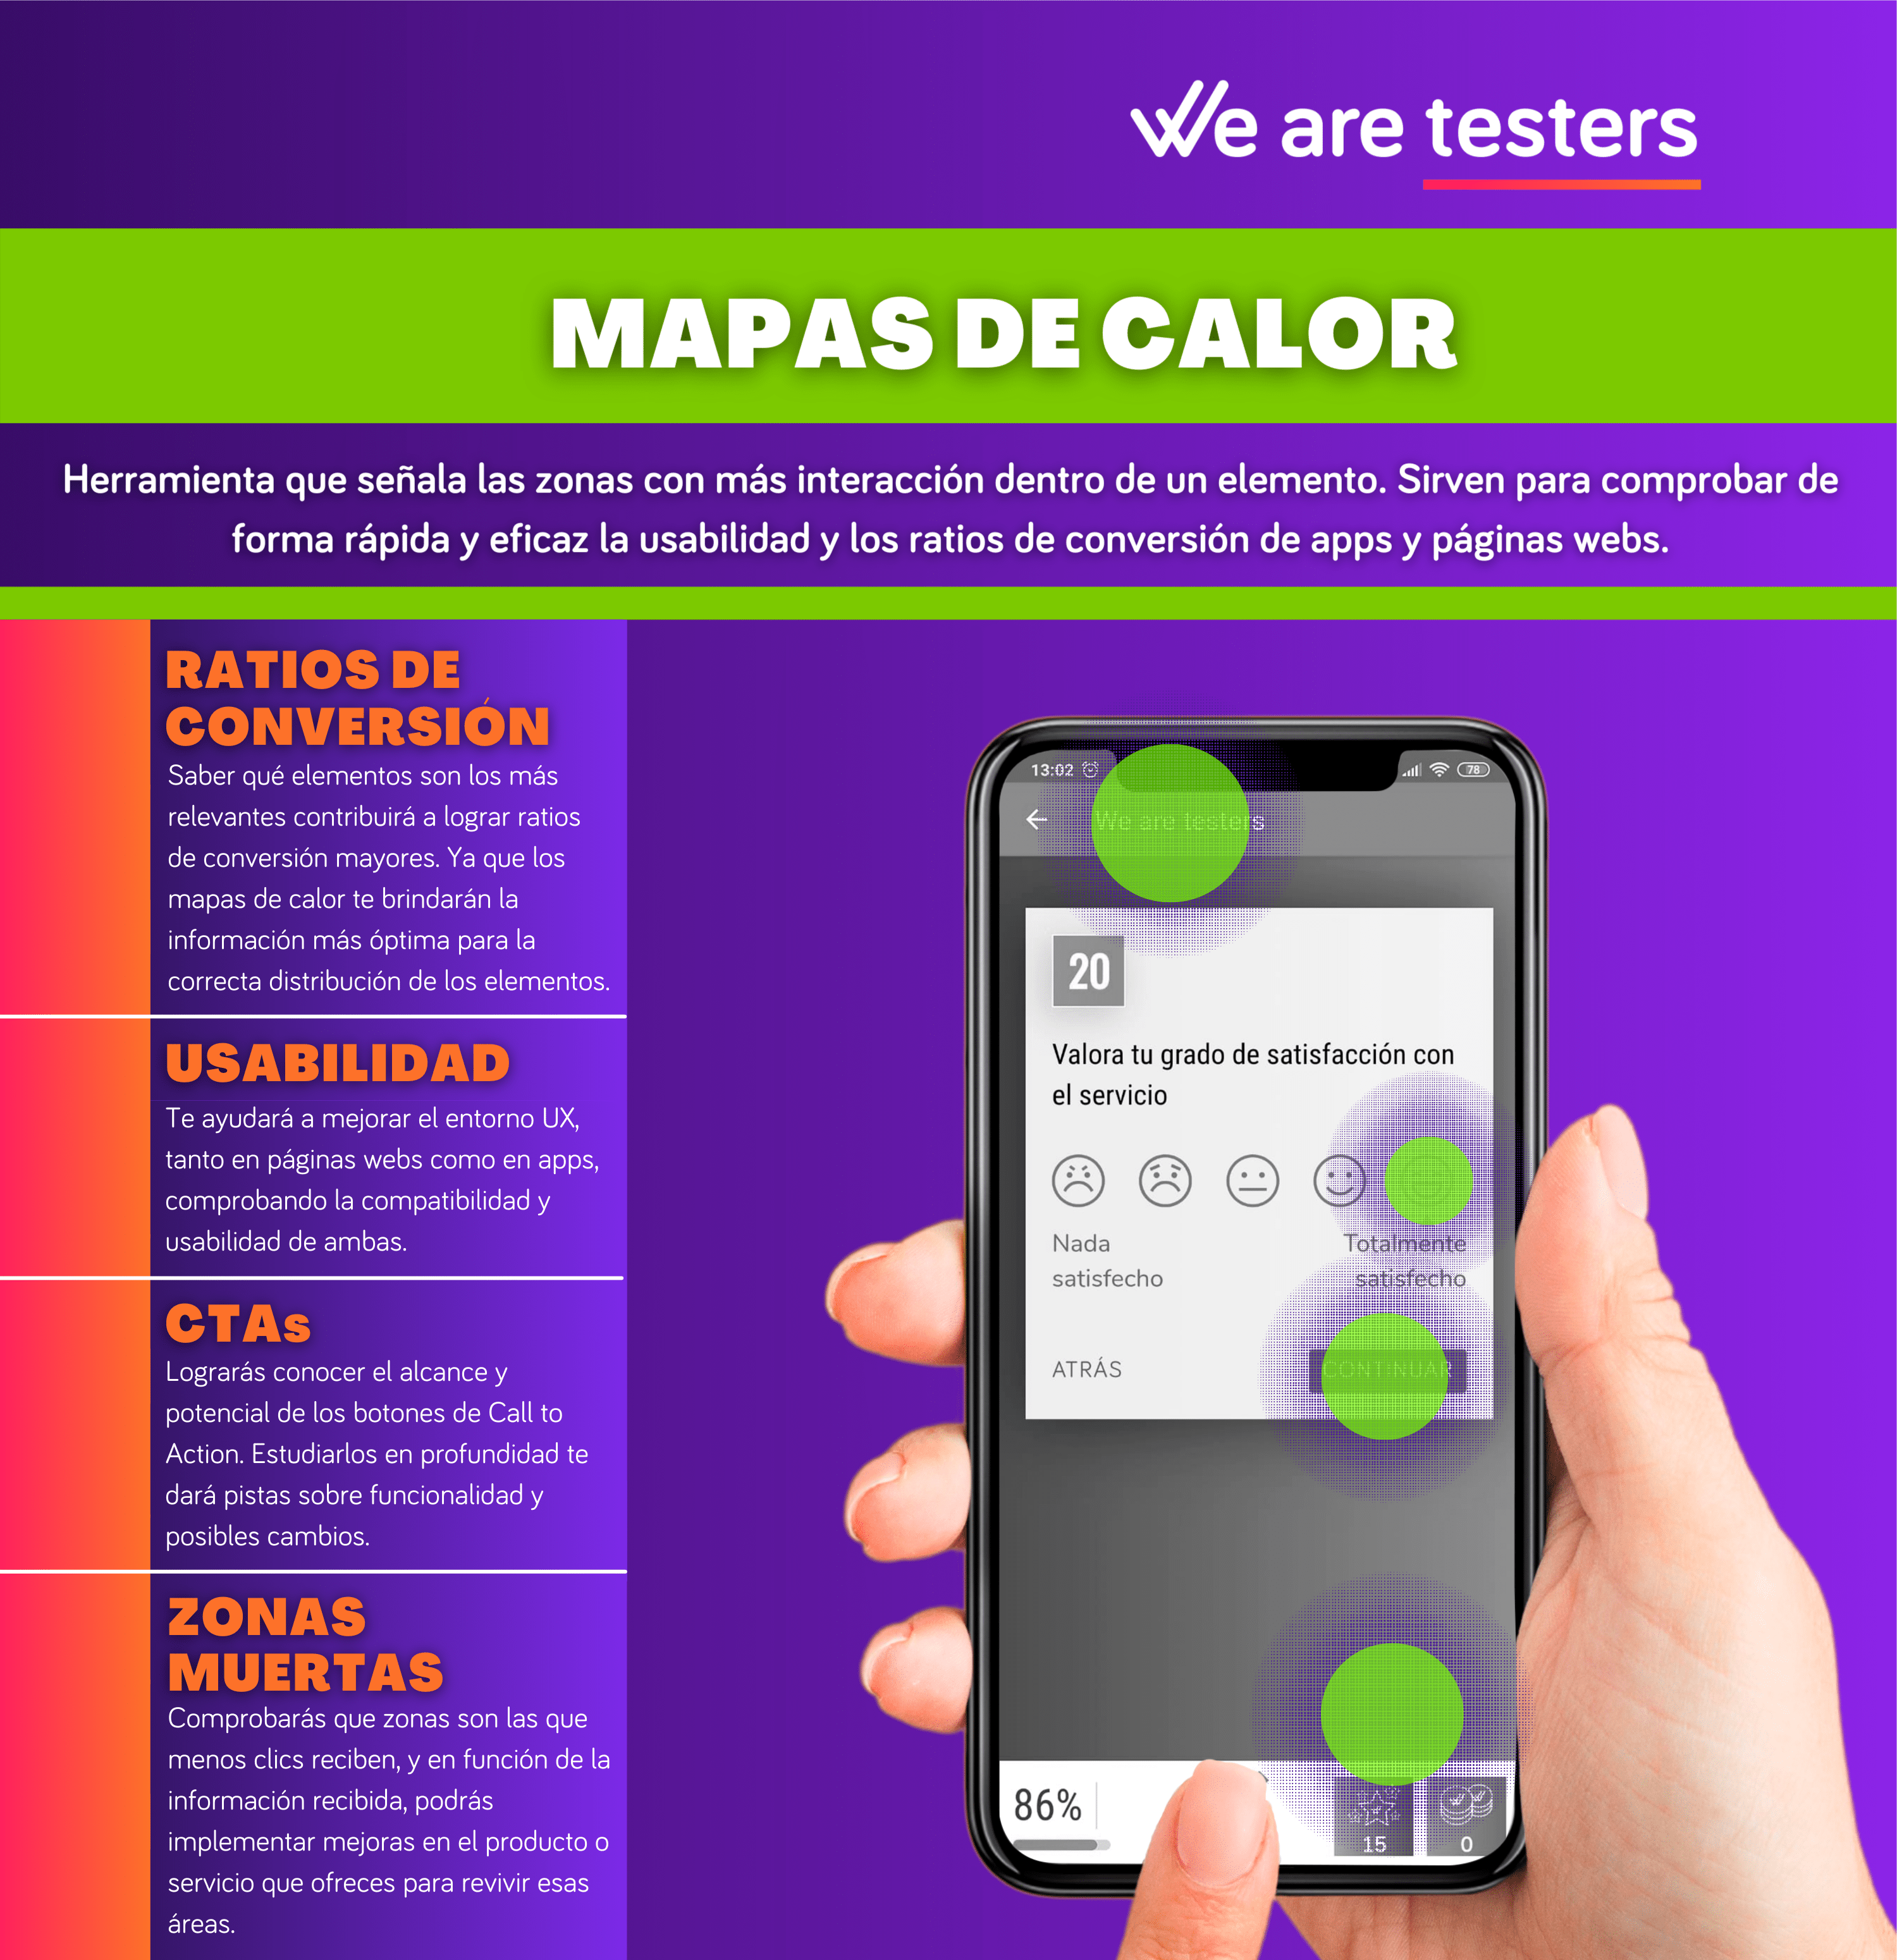 https://www.wearetesters.com/wp-content/uploads/2021/10/Mapas-calor-we-are-testers.png